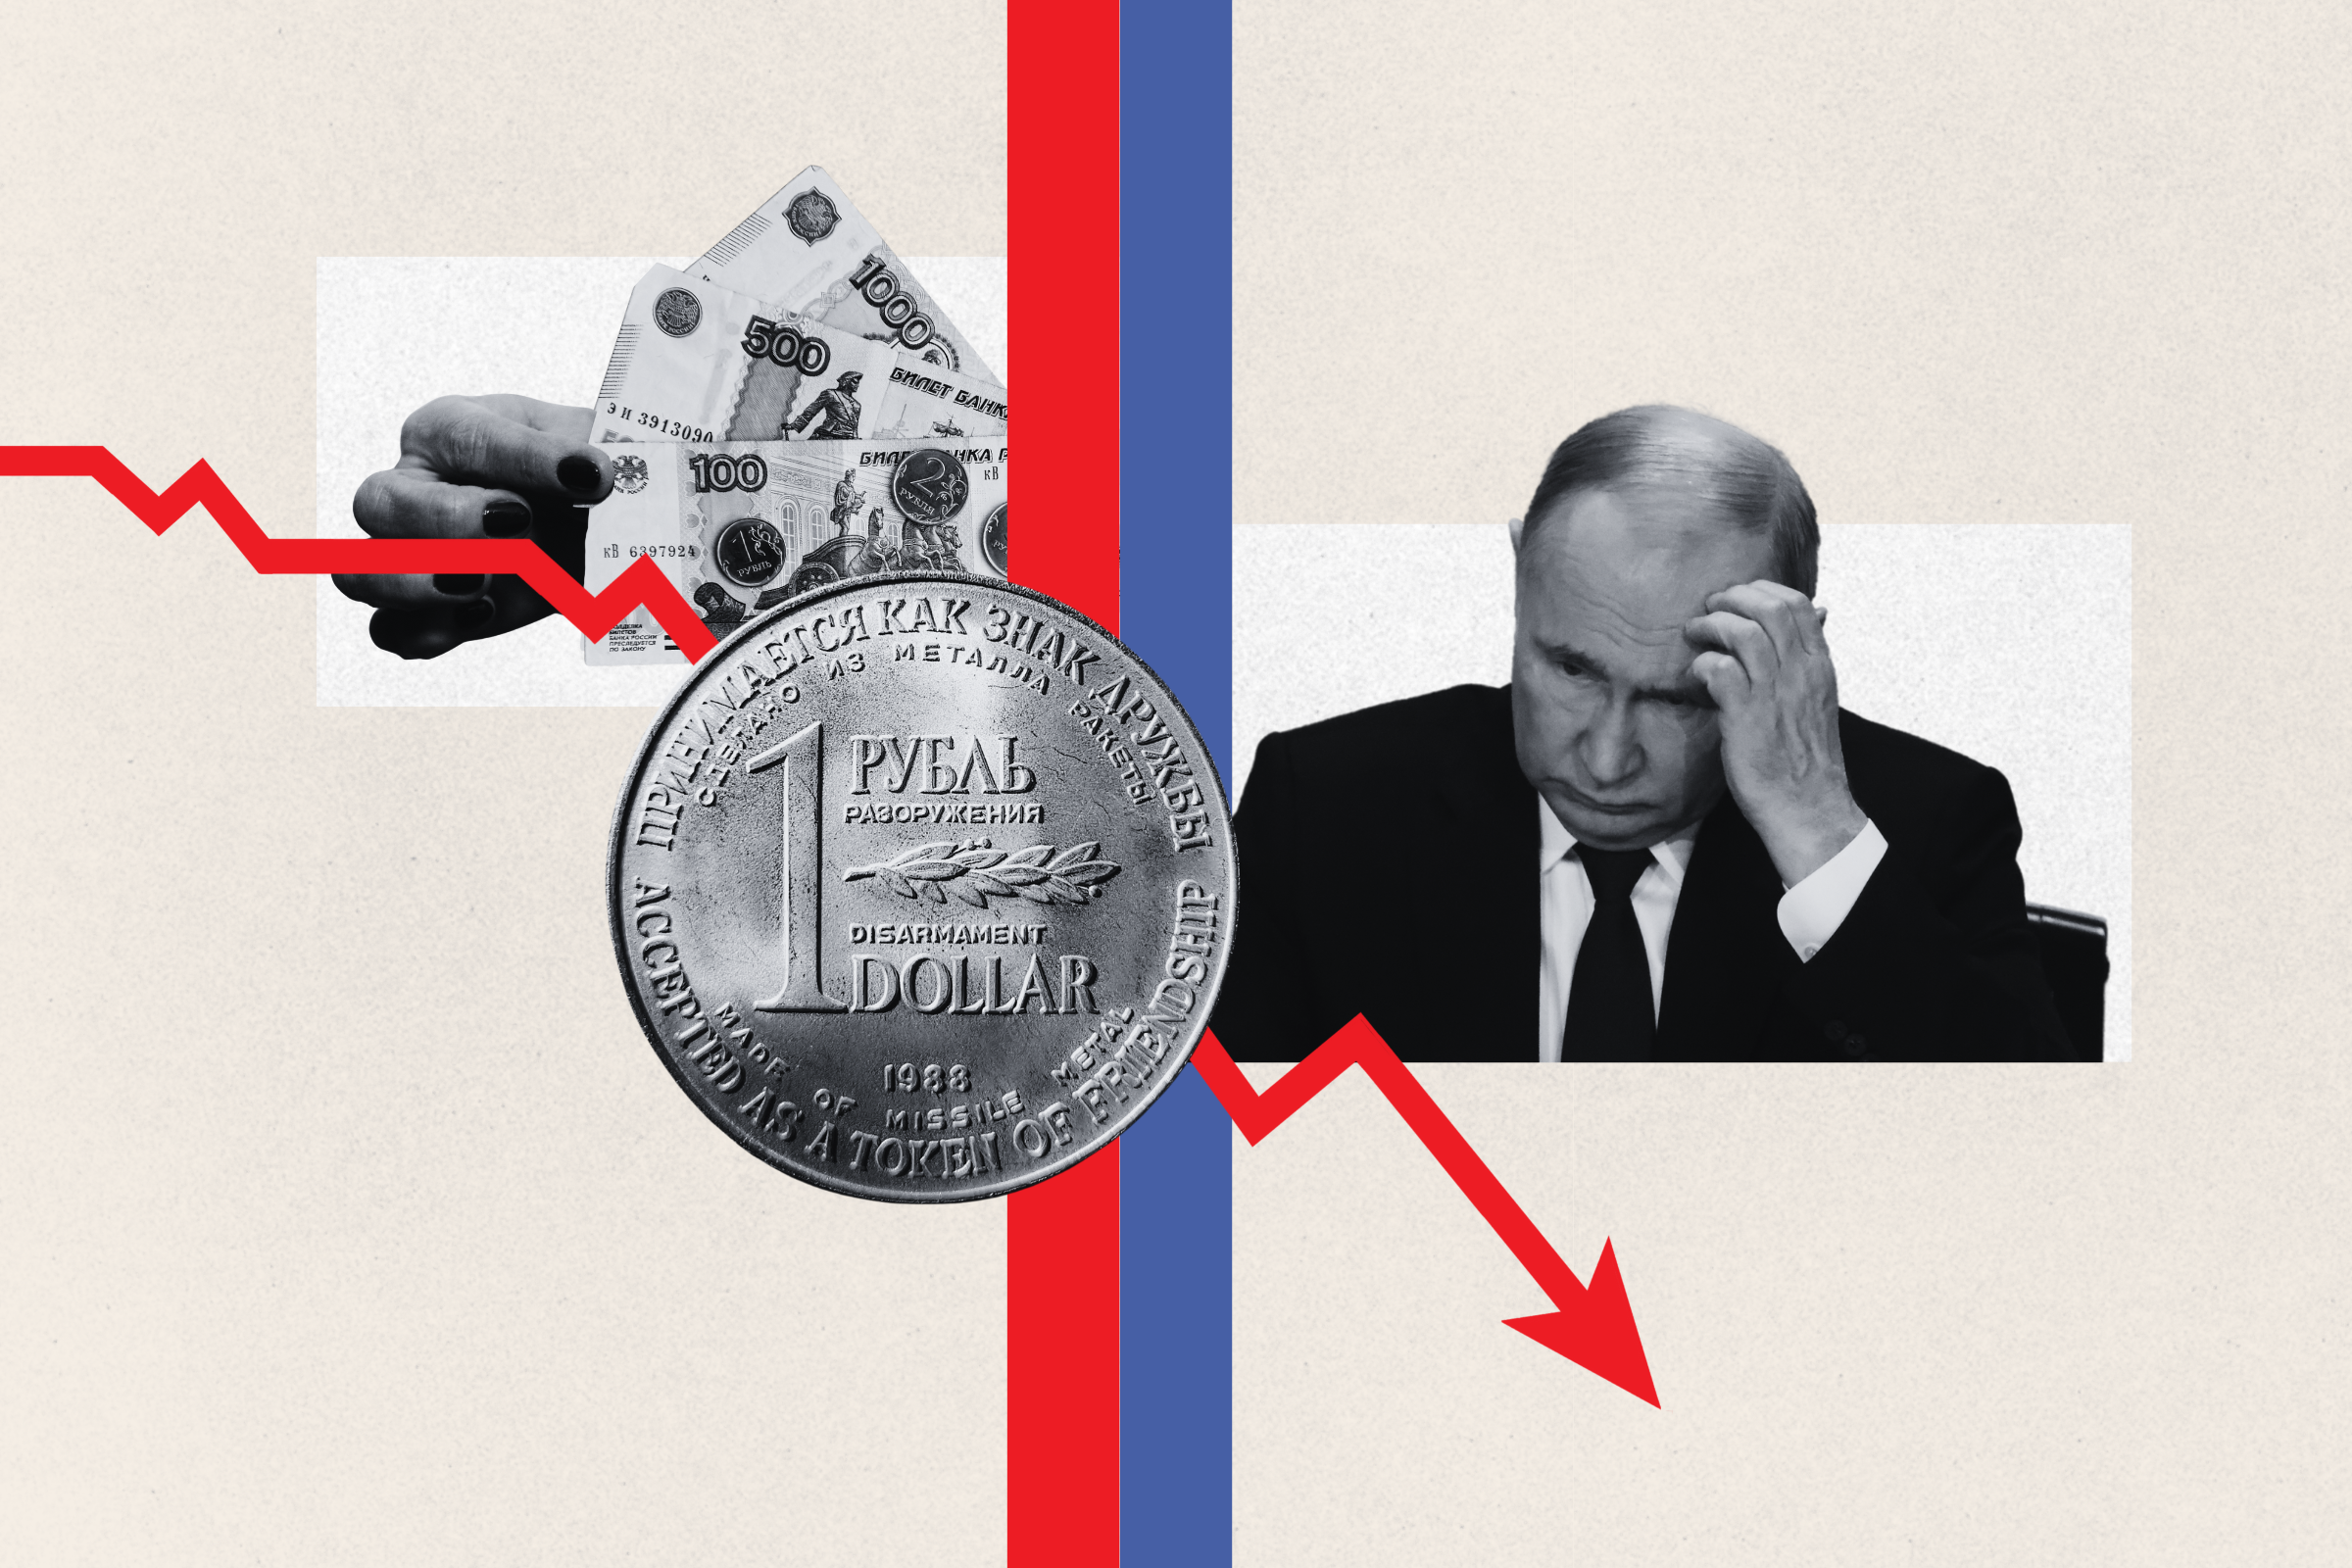 China's economic gambit could nuke Putin's dollar ploy